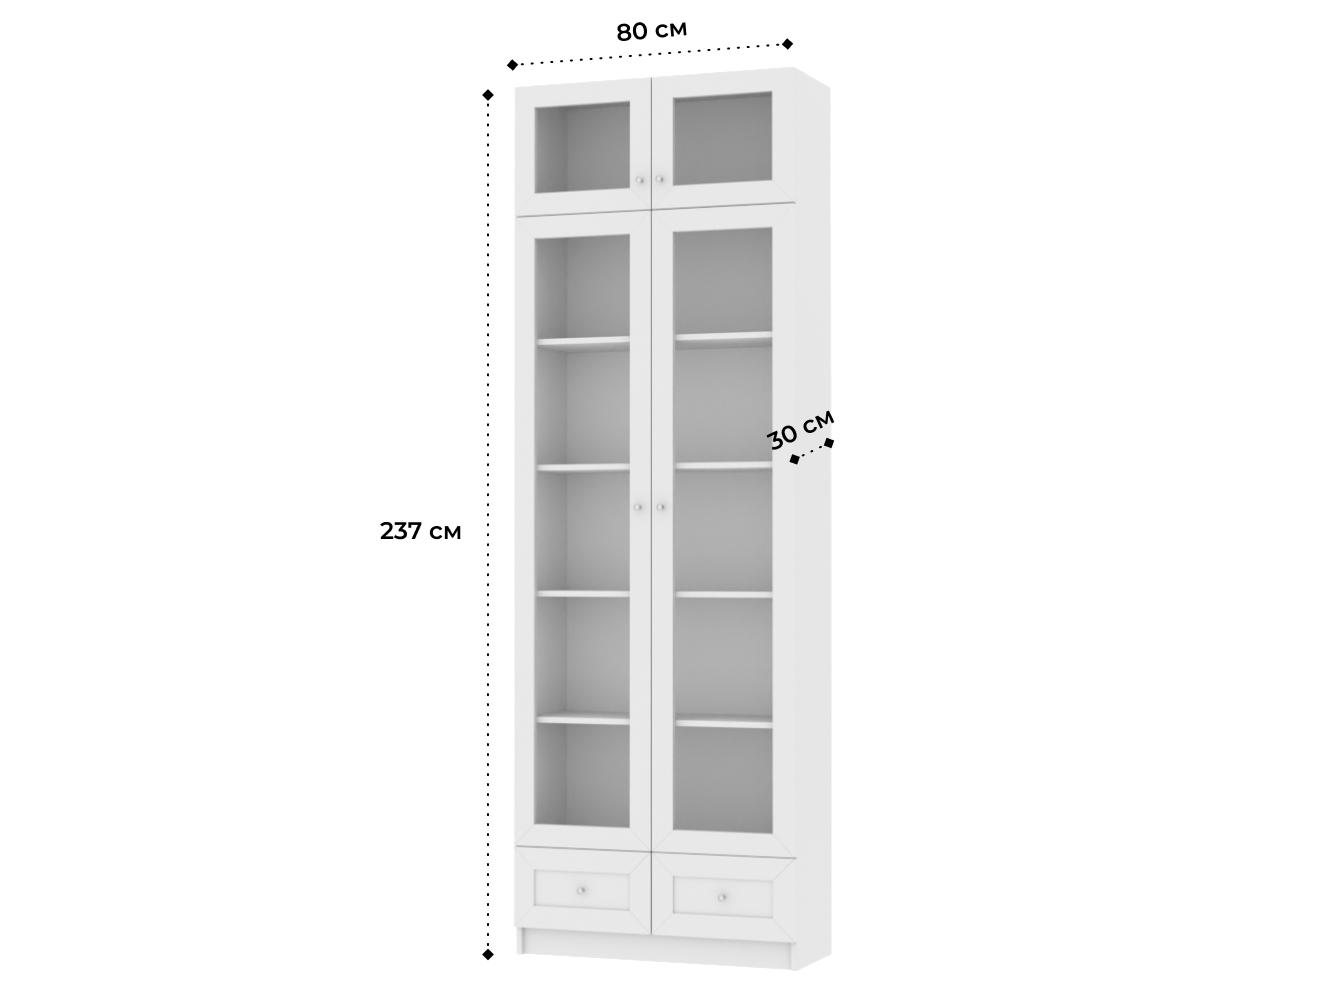  Книжный шкаф Билли 323 white ИКЕА (IKEA) изображение товара